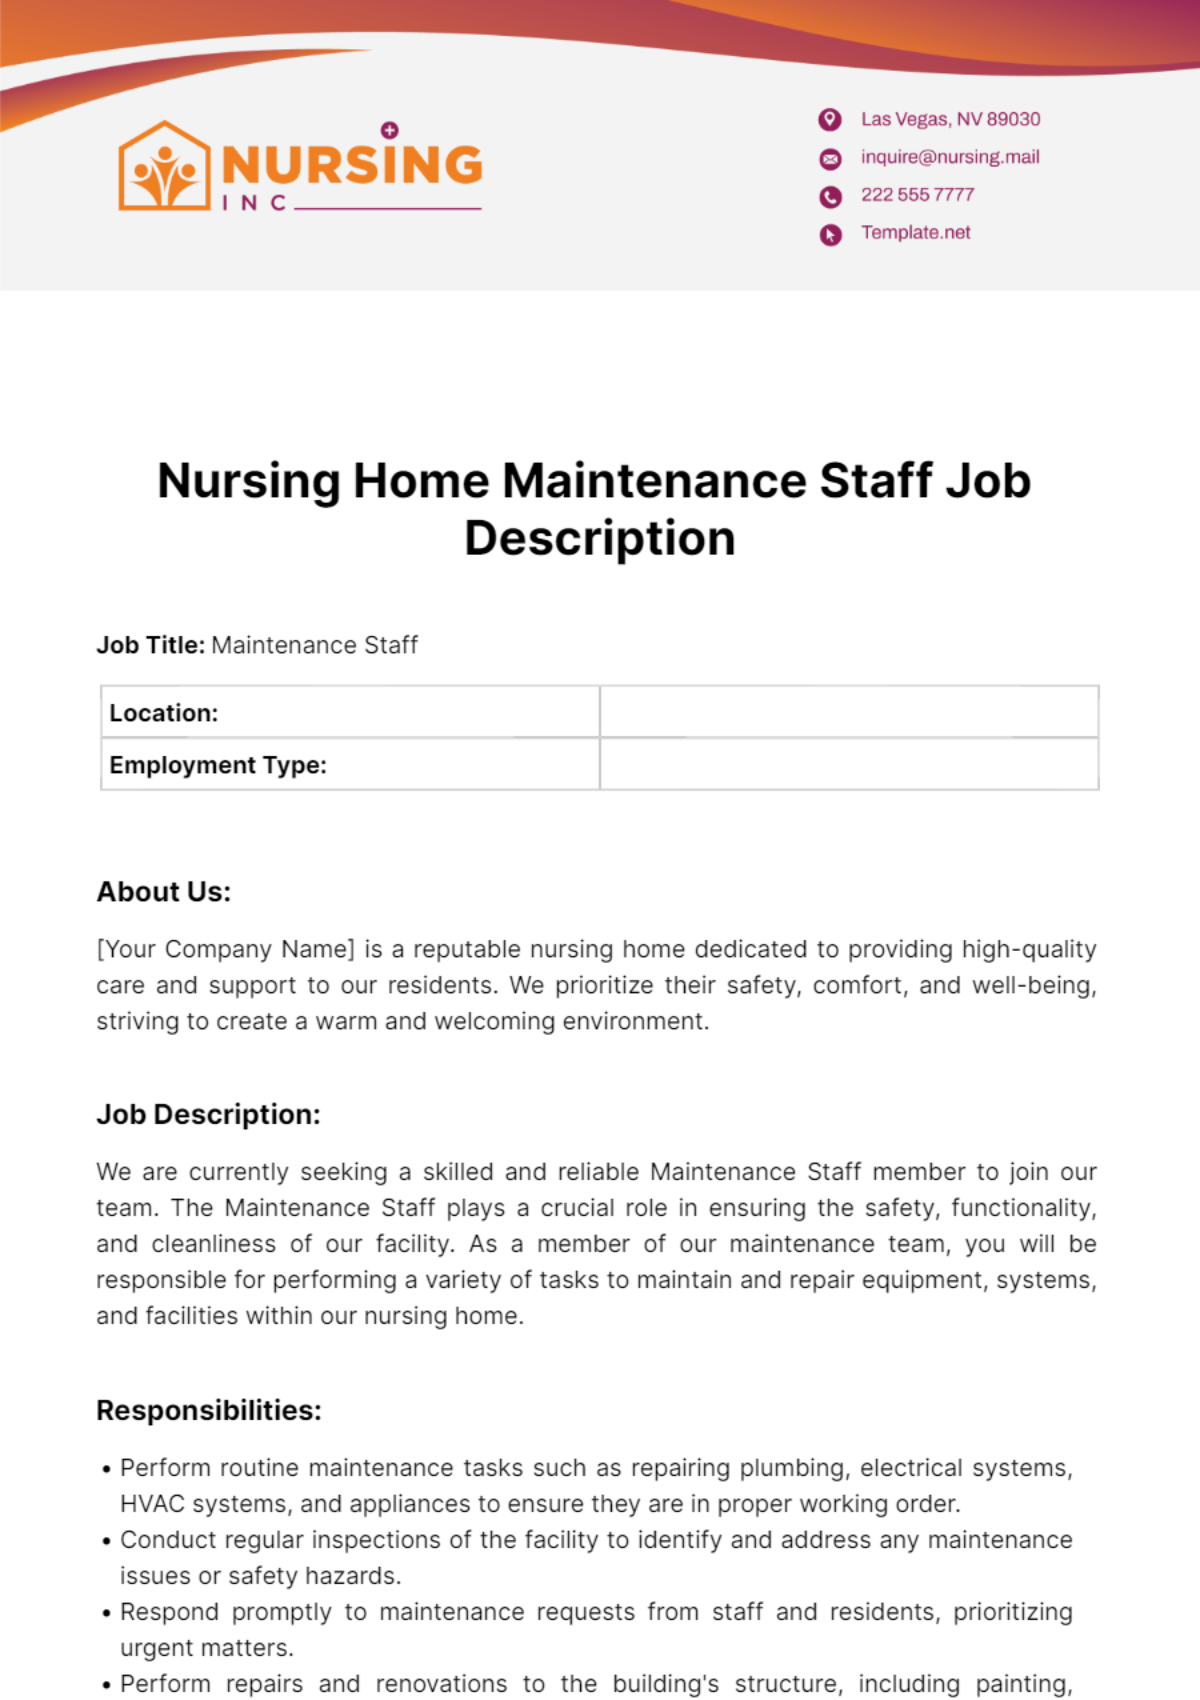 Free Nursing Home Maintenance Staff Job Description Template